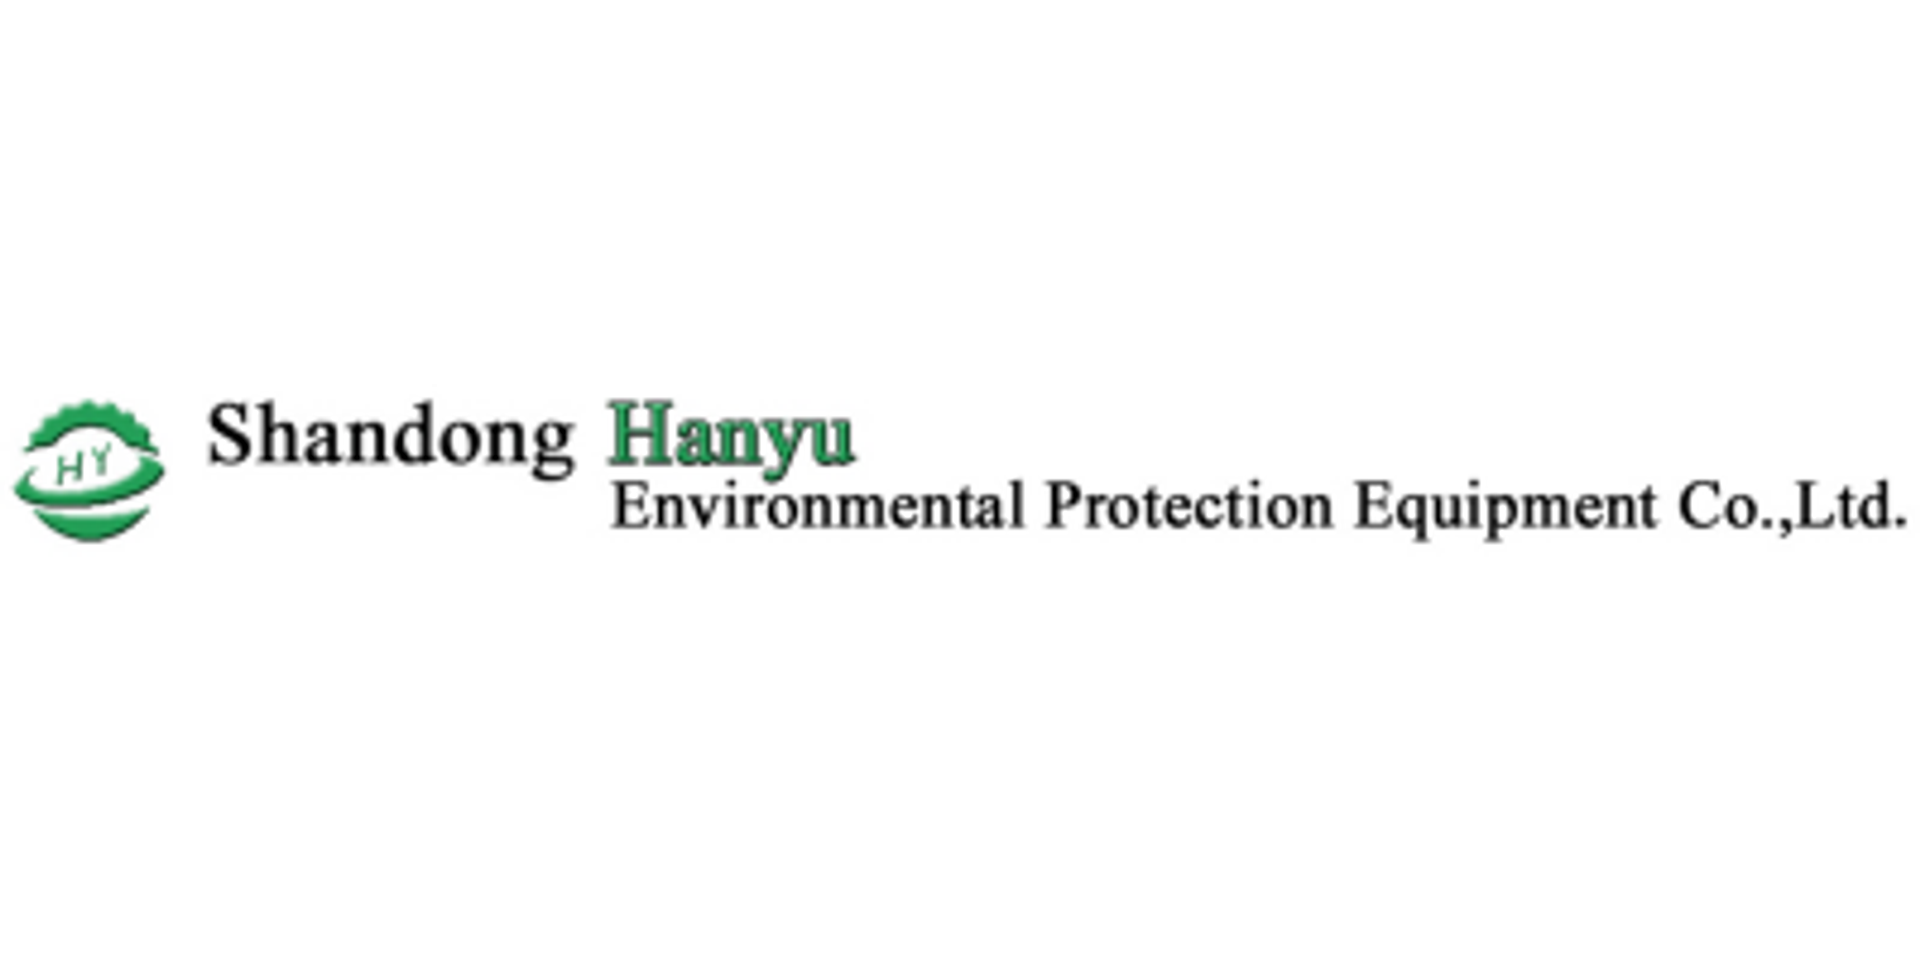 Shandong Hanyu Environmental Protection Equipment Co., LTD